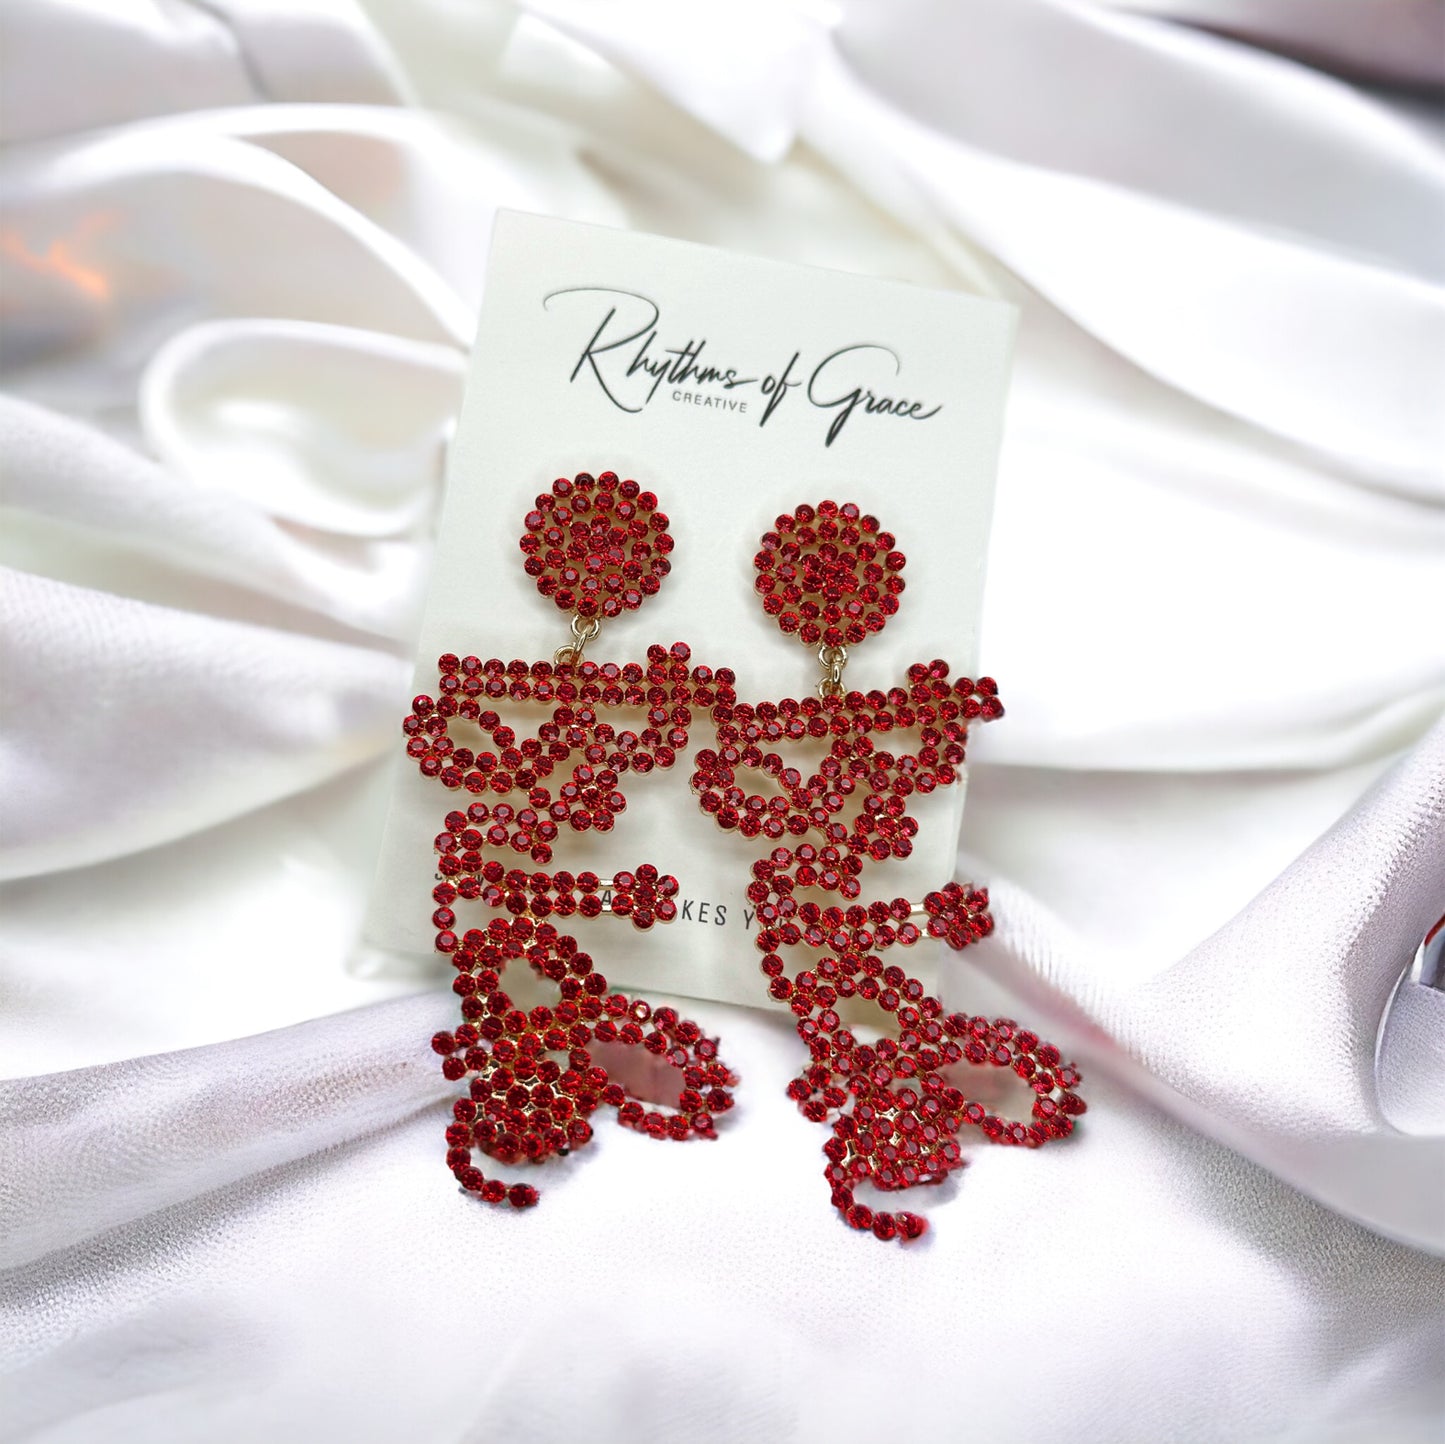 Rhinestone Bridal Earrings - Bridal Shower, Bridal Accessories, Rhinestone Earrings, Engagement Party, Honeymoon, Bridal Earrings, Bridal Accessories, Bride Tribe, Bachelorette